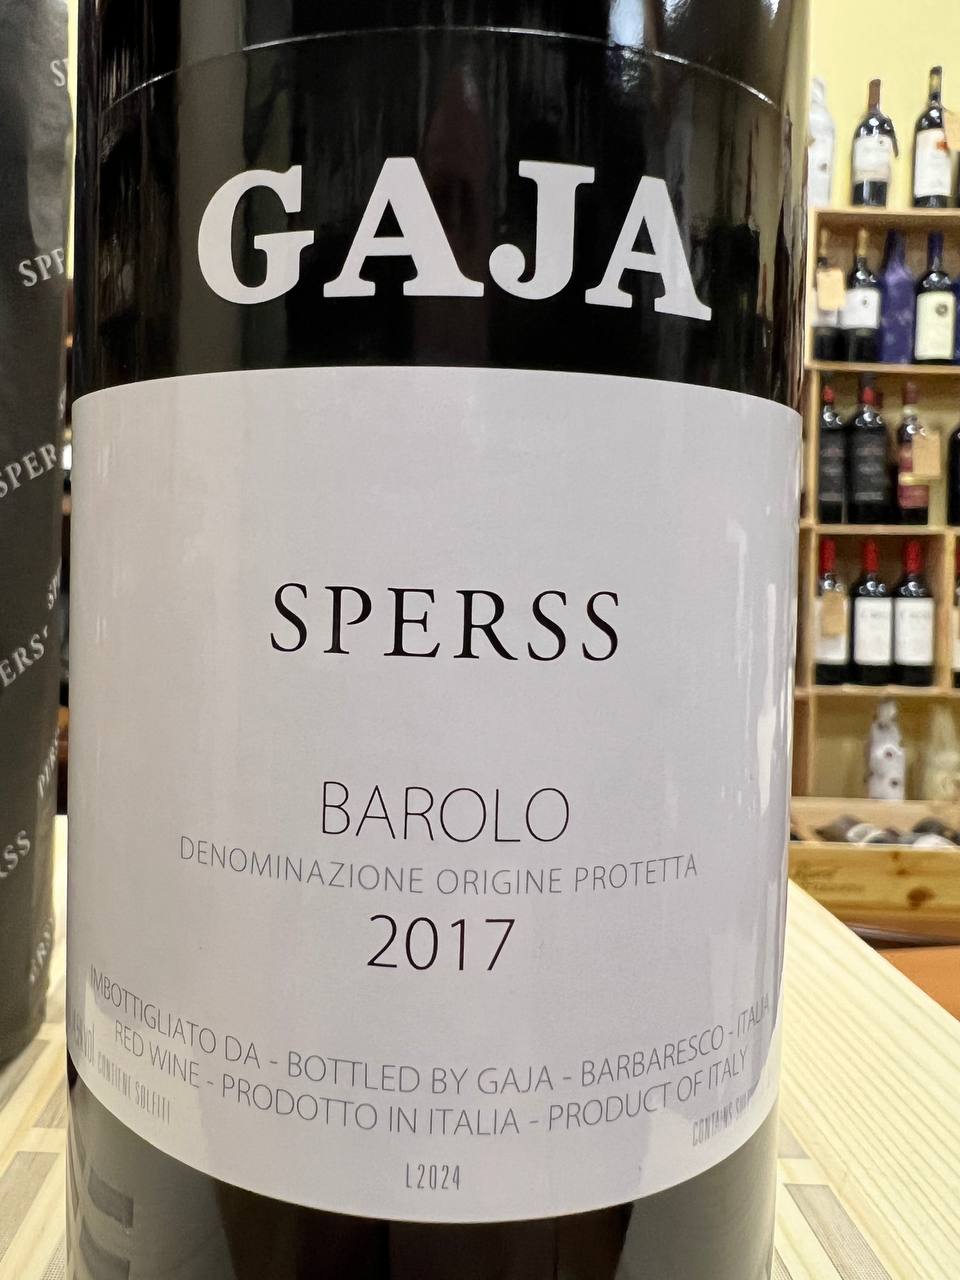 Barolo Sperss Gaja 2017